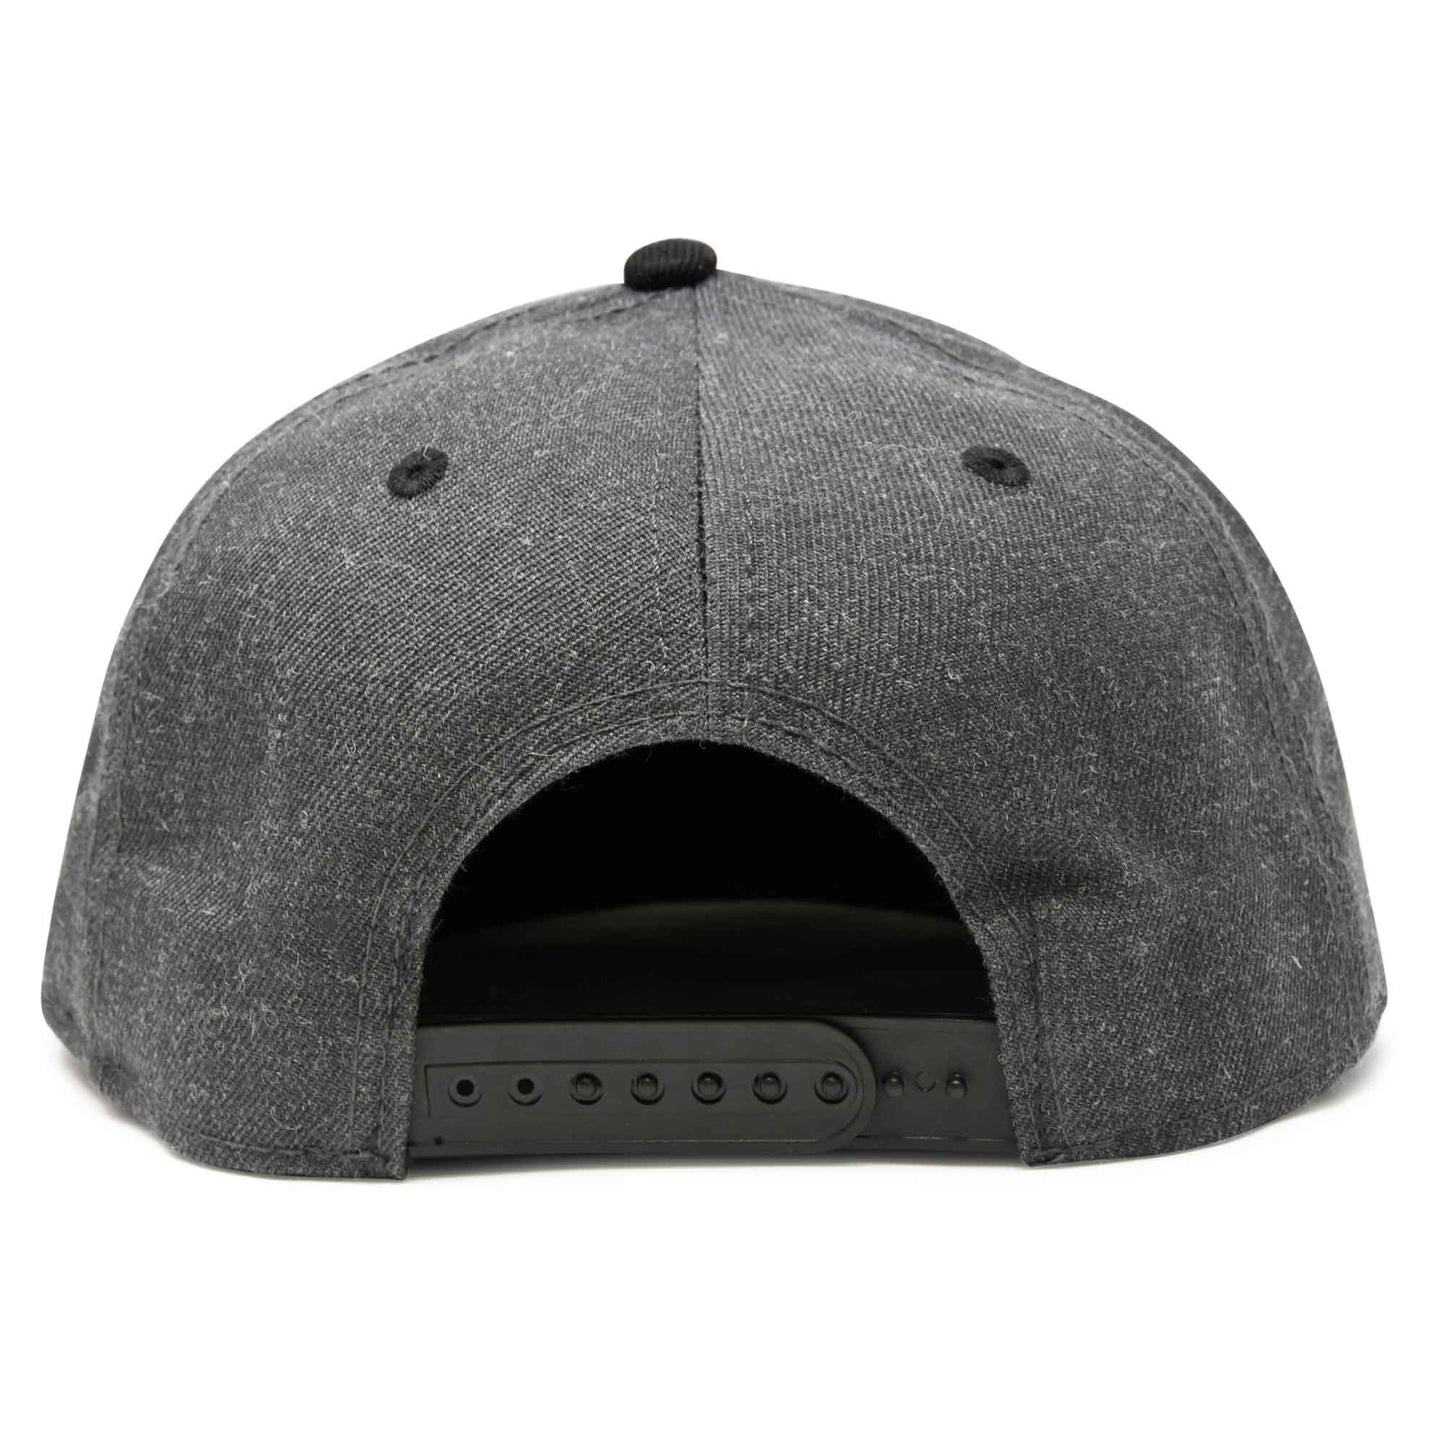 Dalix Flamingo Snapback Flat Bill Baseball Hat Embroidered Cap Mens in Black Light Gray